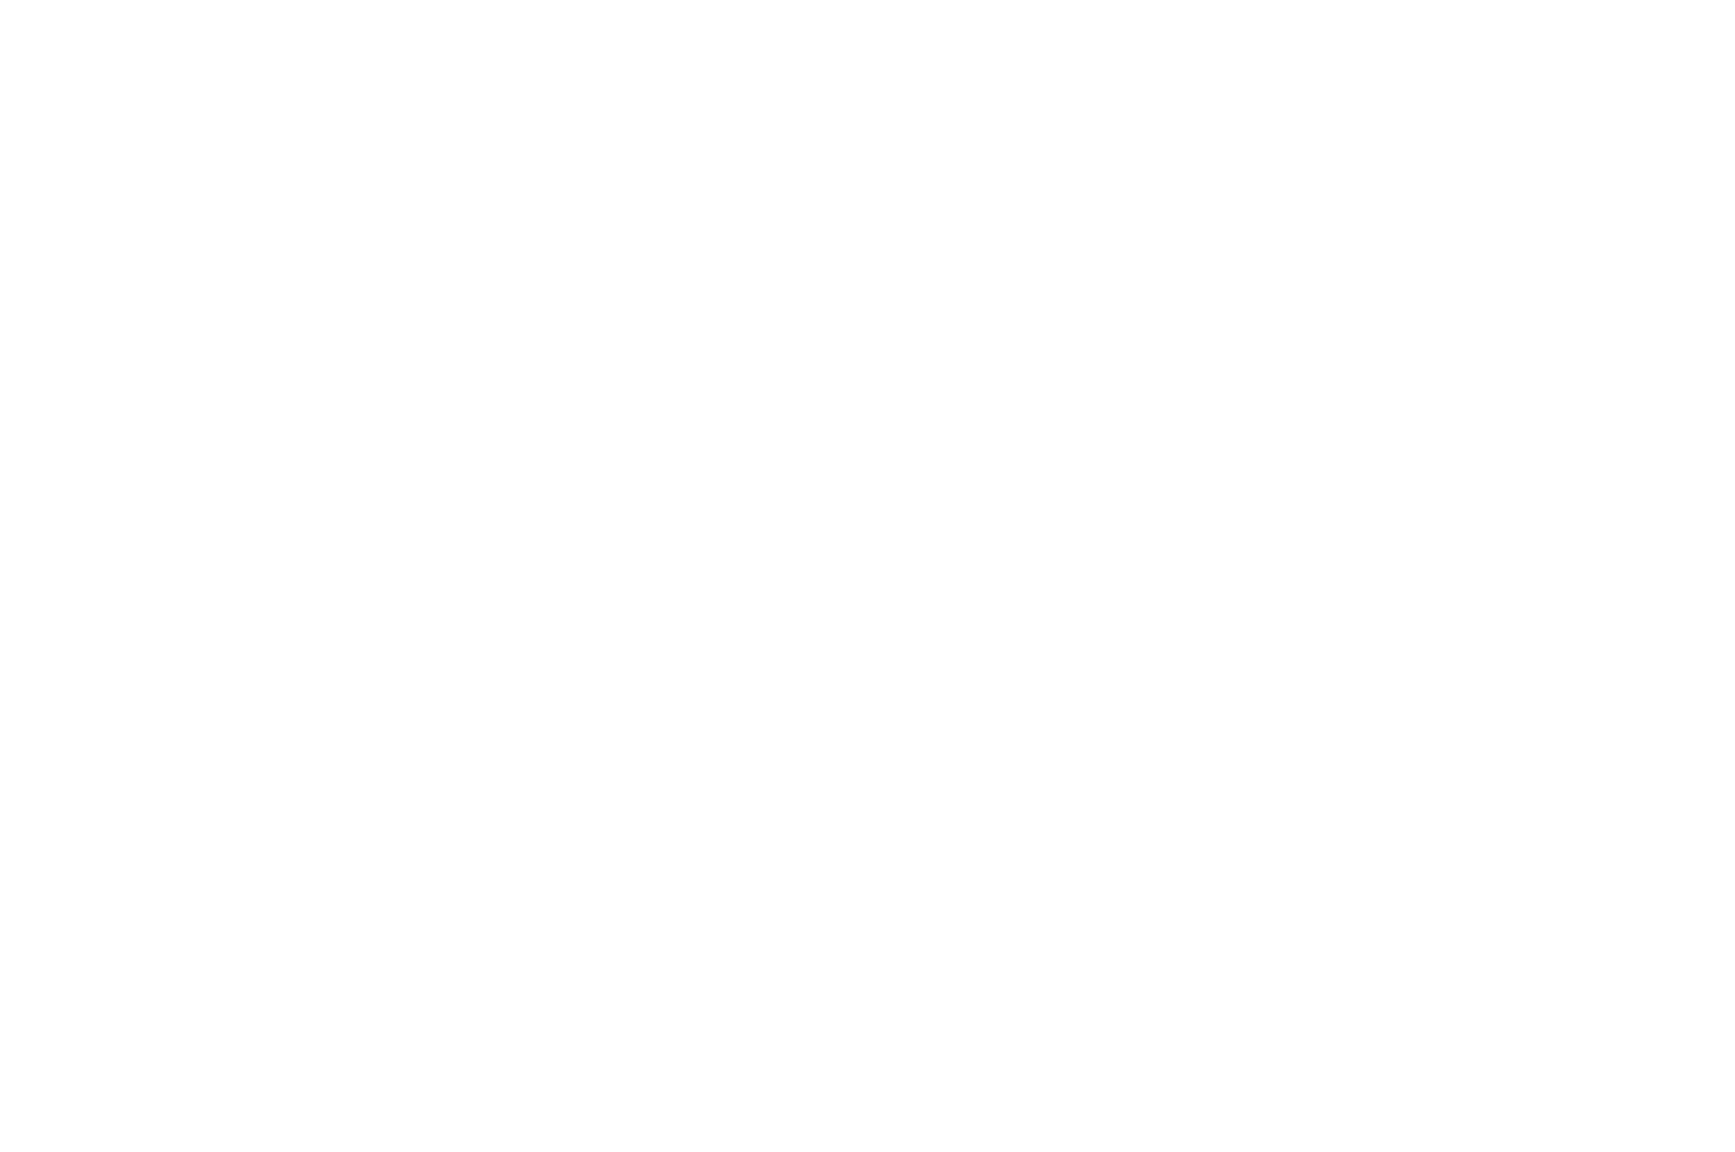 OFFICIAL SELECTION - Santa Barbara Fine Arts Film Festival - 2016